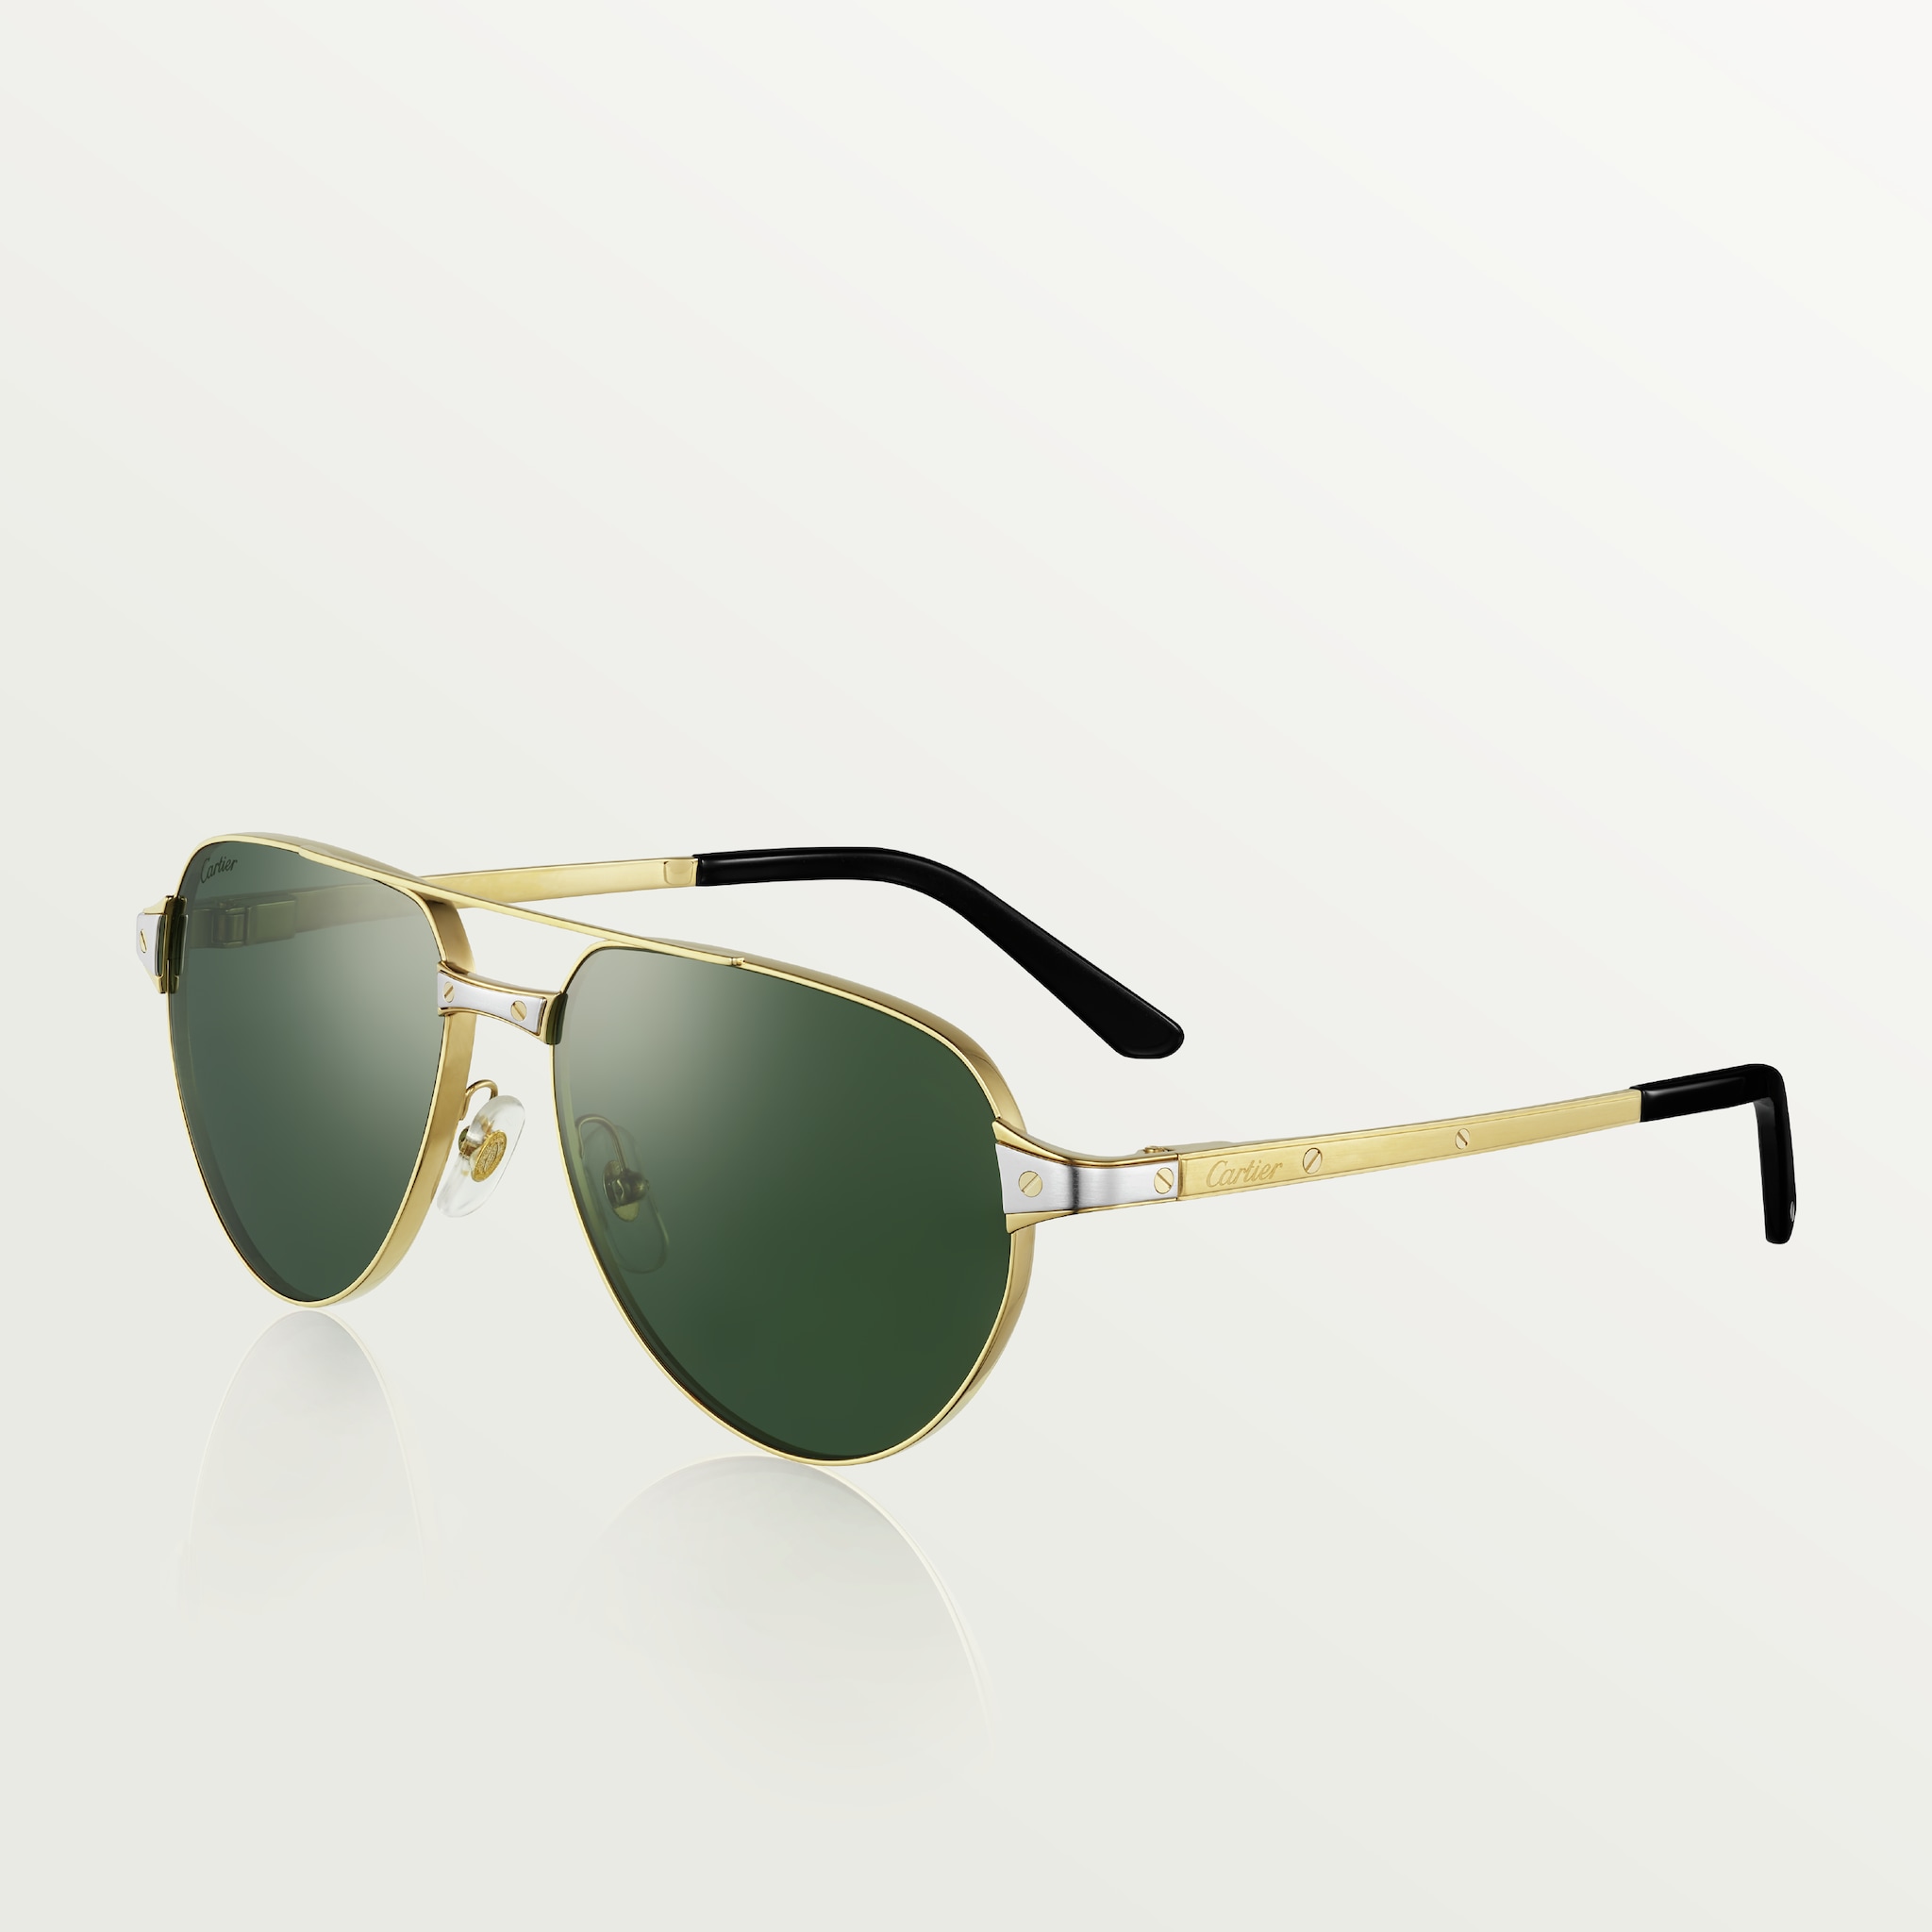 Santos de Cartier sunglassesSmooth and brushed golden-finish metal, green lenses